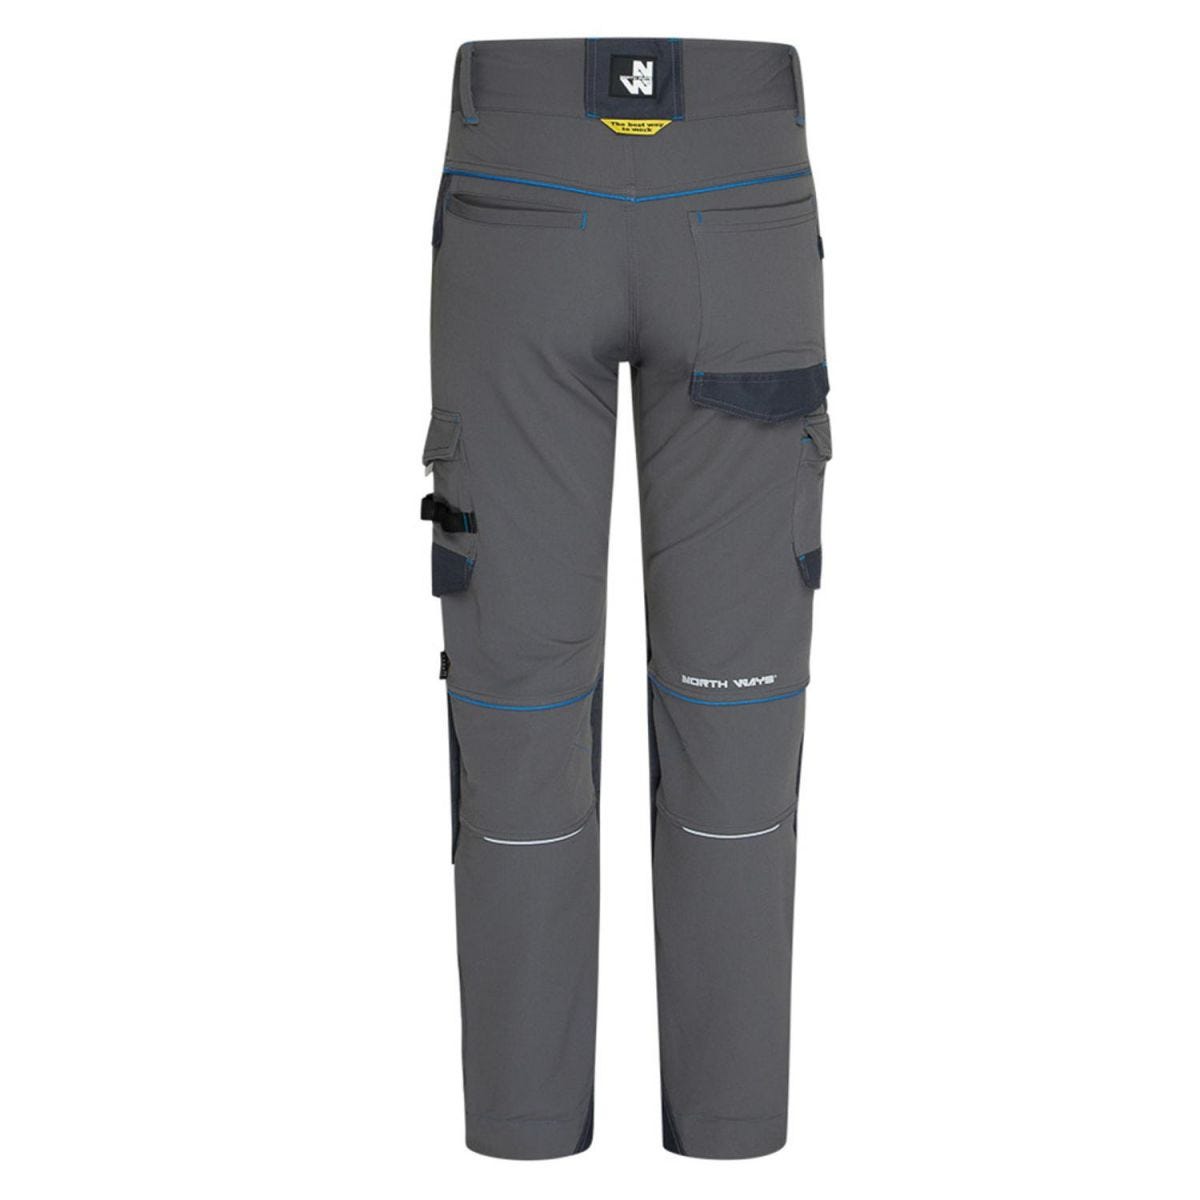 Pantalon de travail SACHA gris/bleu - North Ways - Taille 36 2